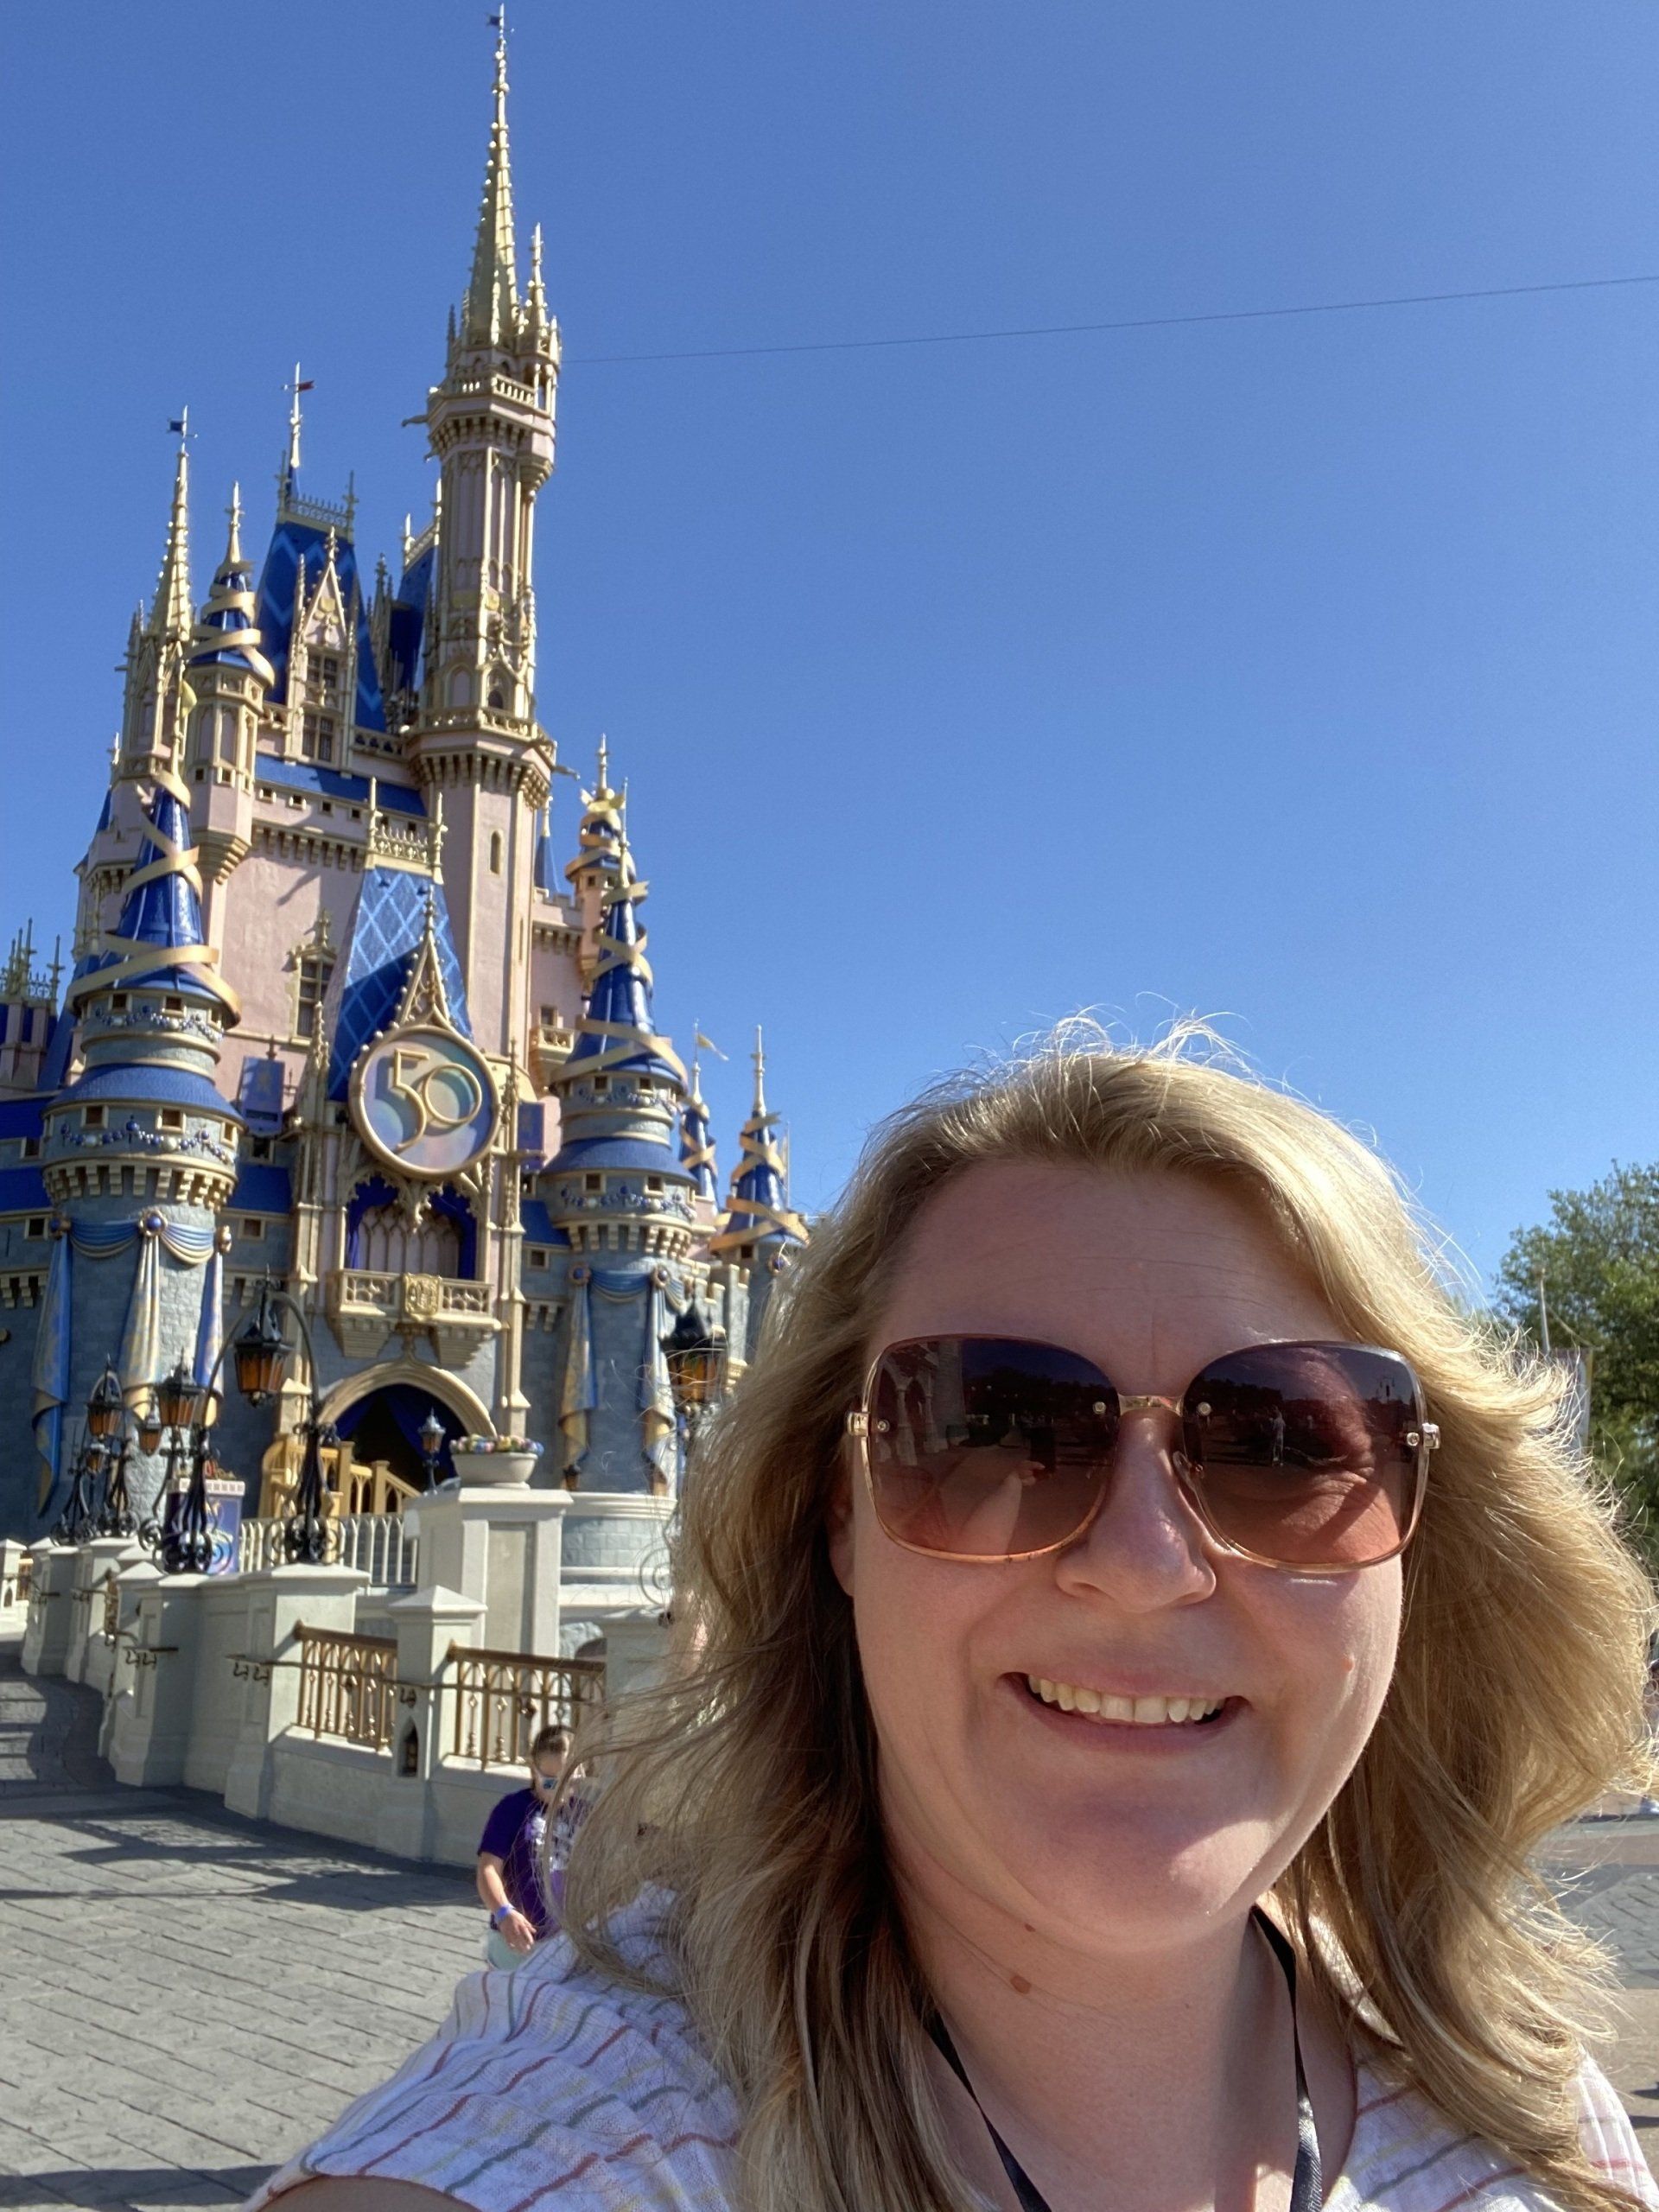 a woman wearing sunglasses is taking a selfie in front of a castle .